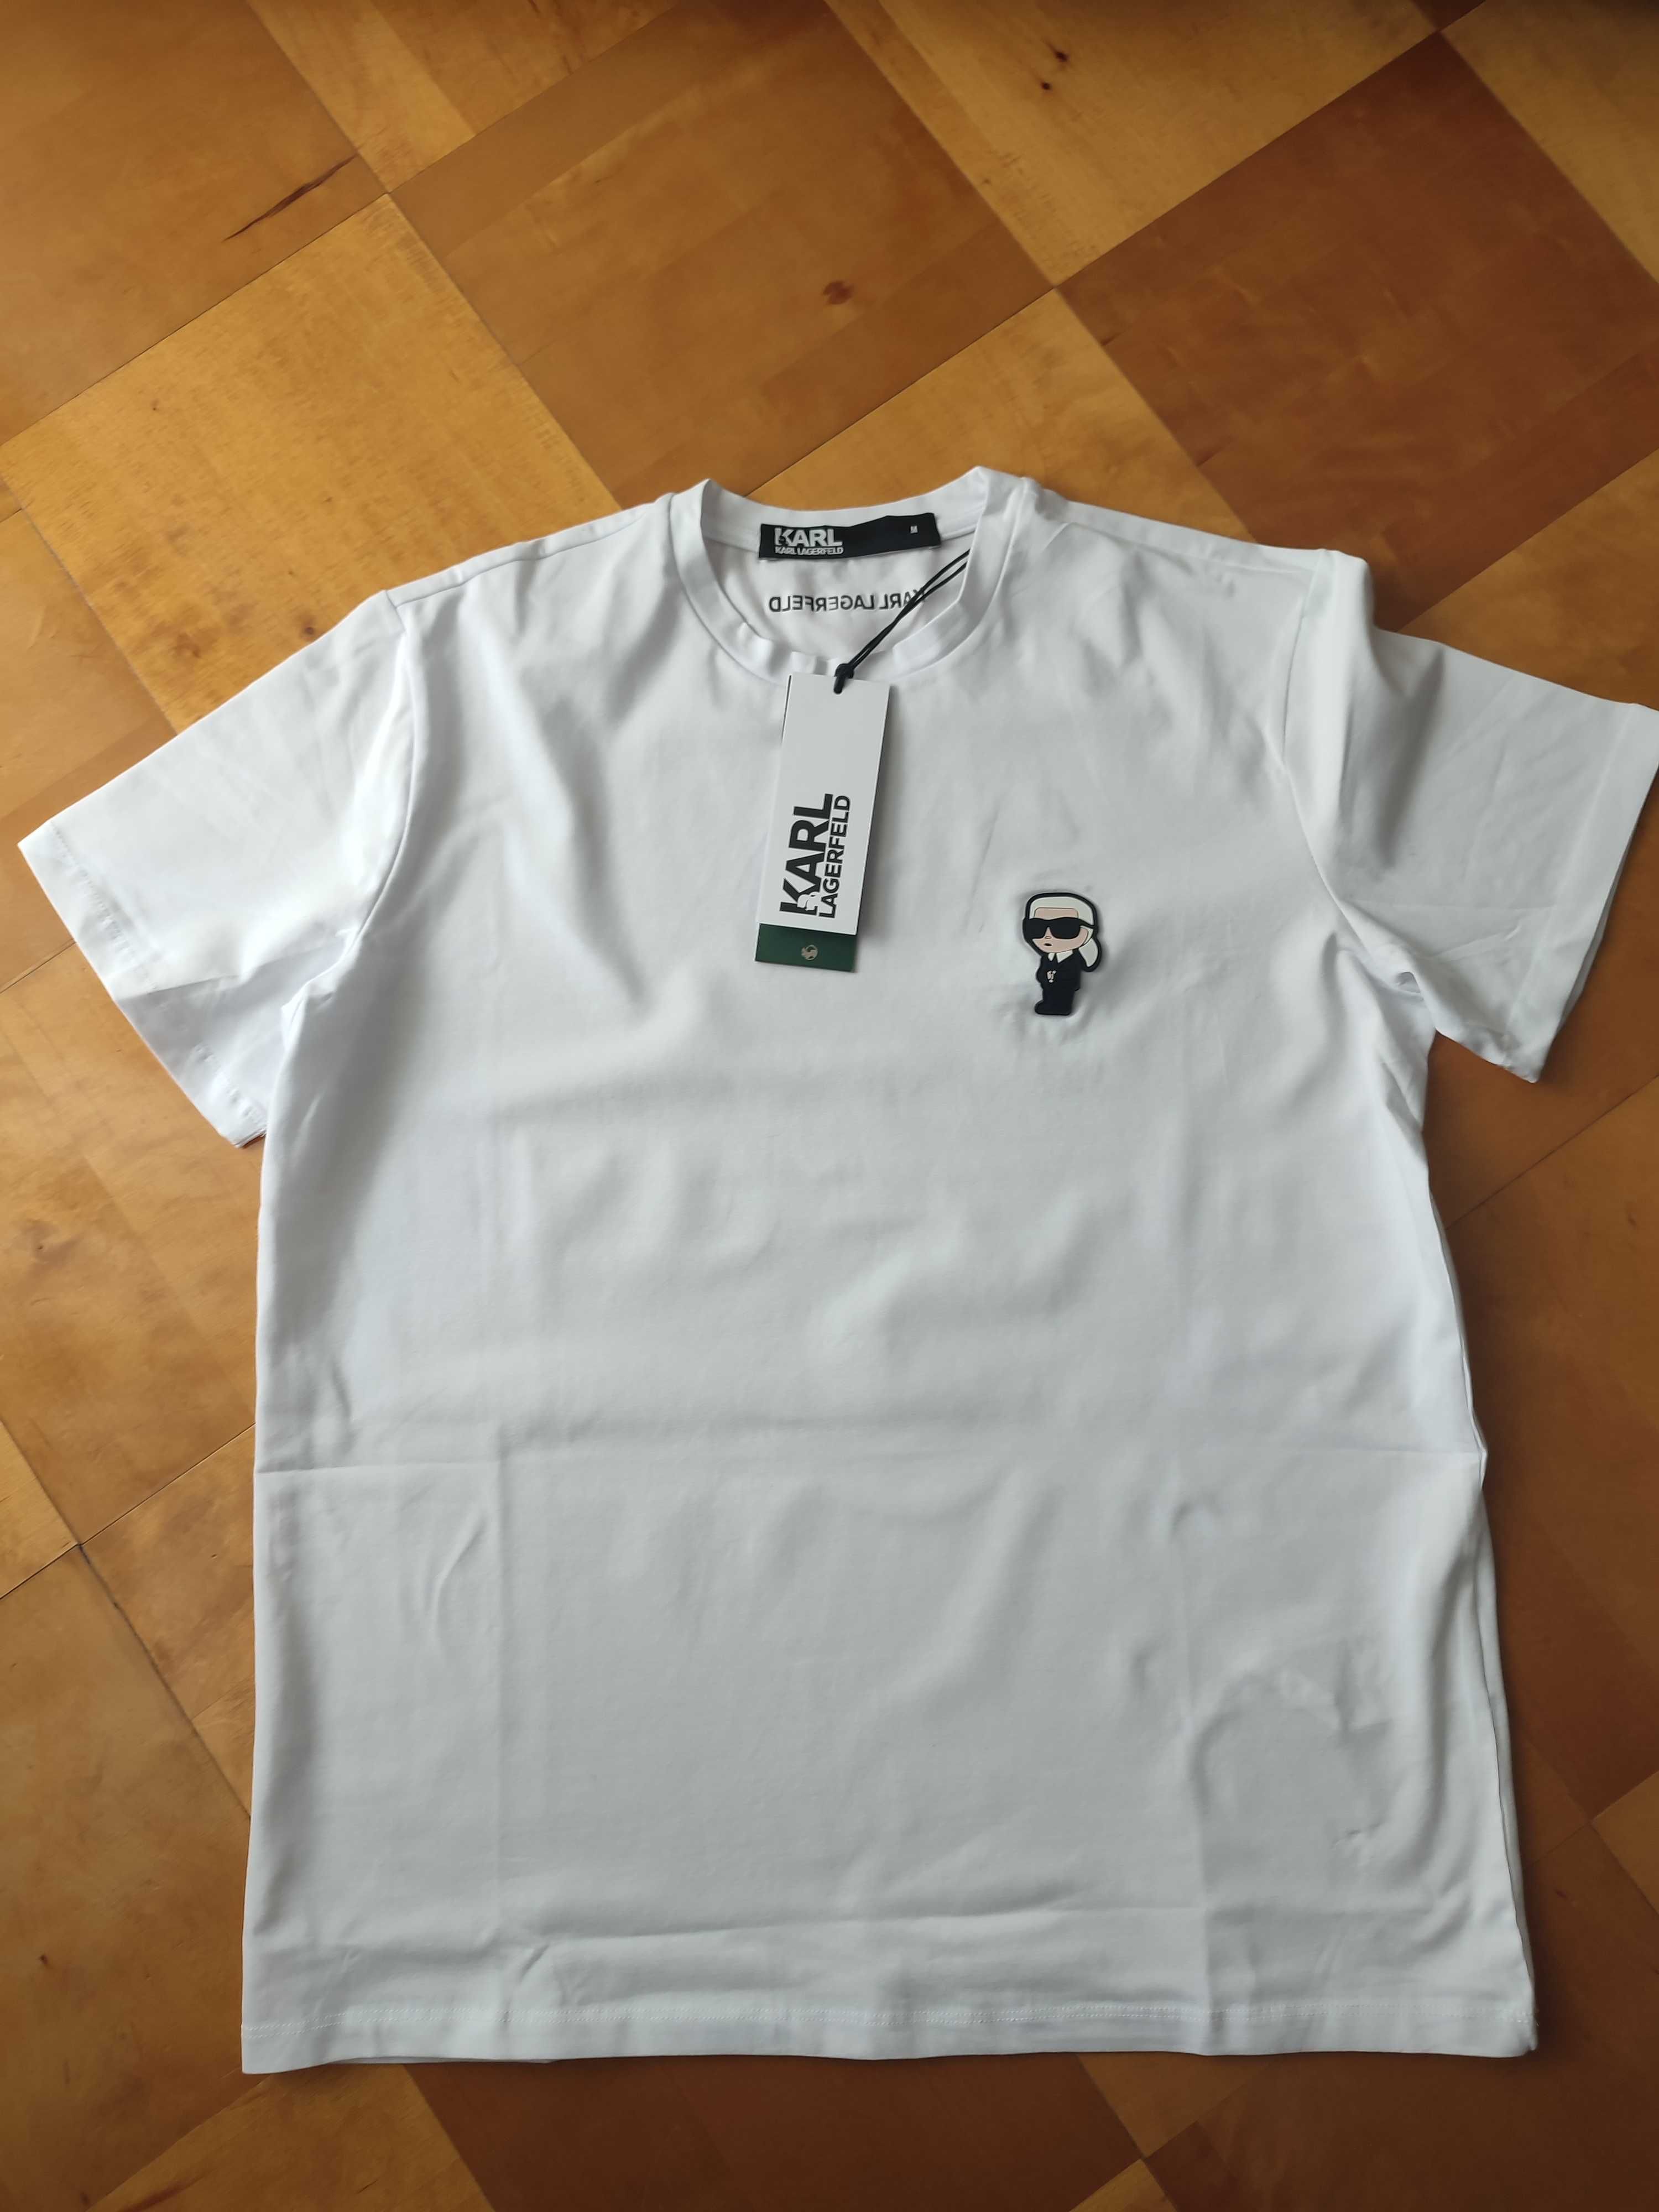 Karl Lagerfeld T-Shirt rozm.M koszulka biała